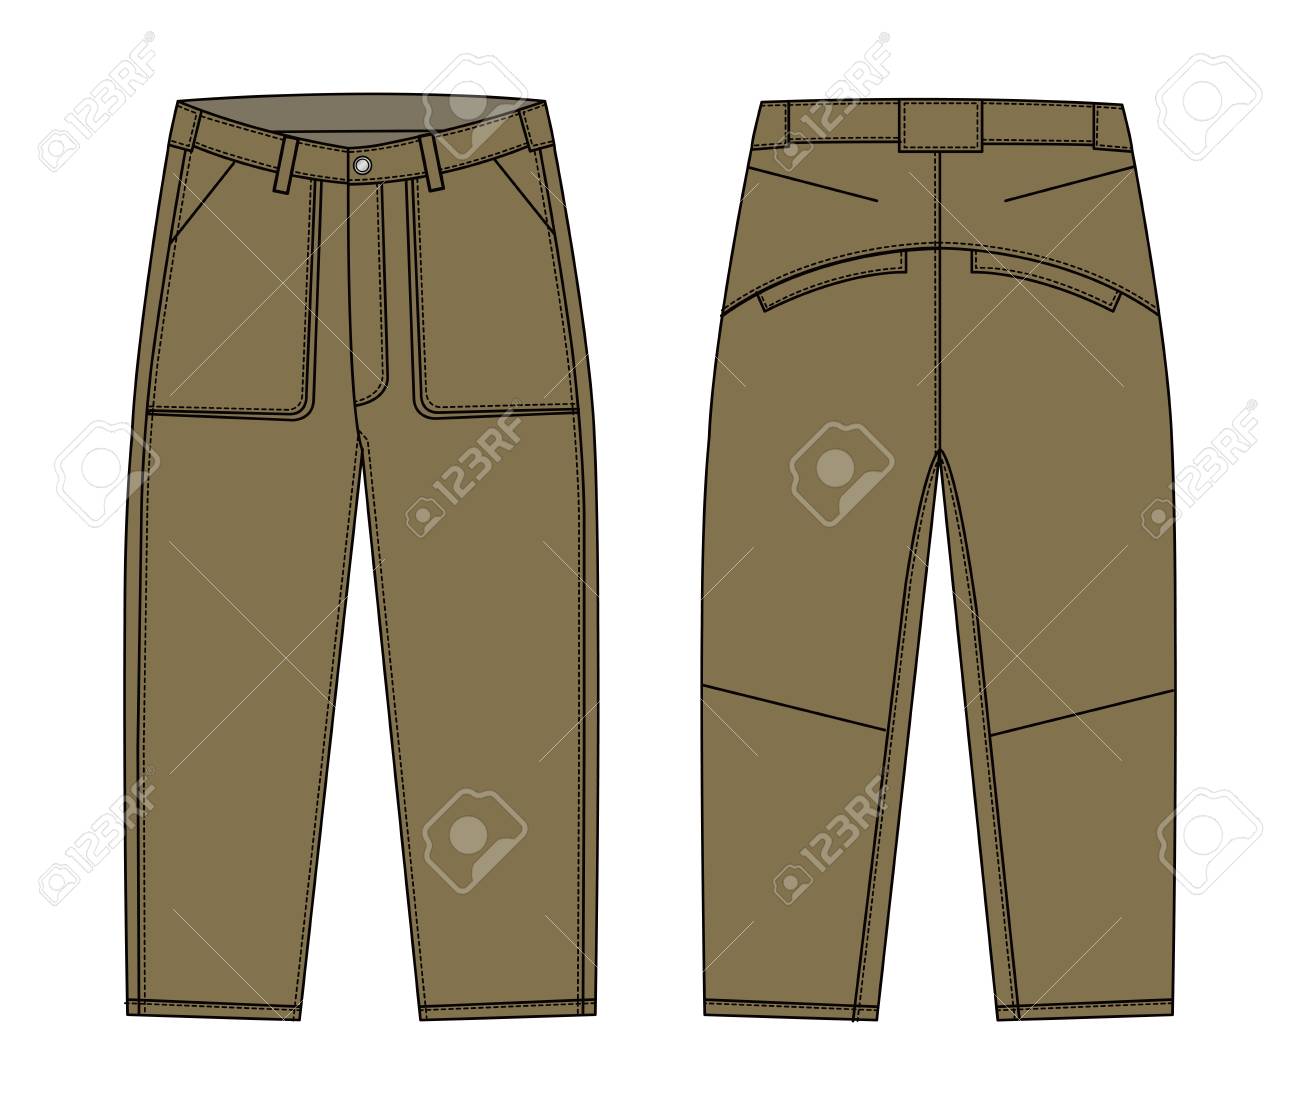 Illustration of menu0027s cargo pants Stock Vector - 91808701